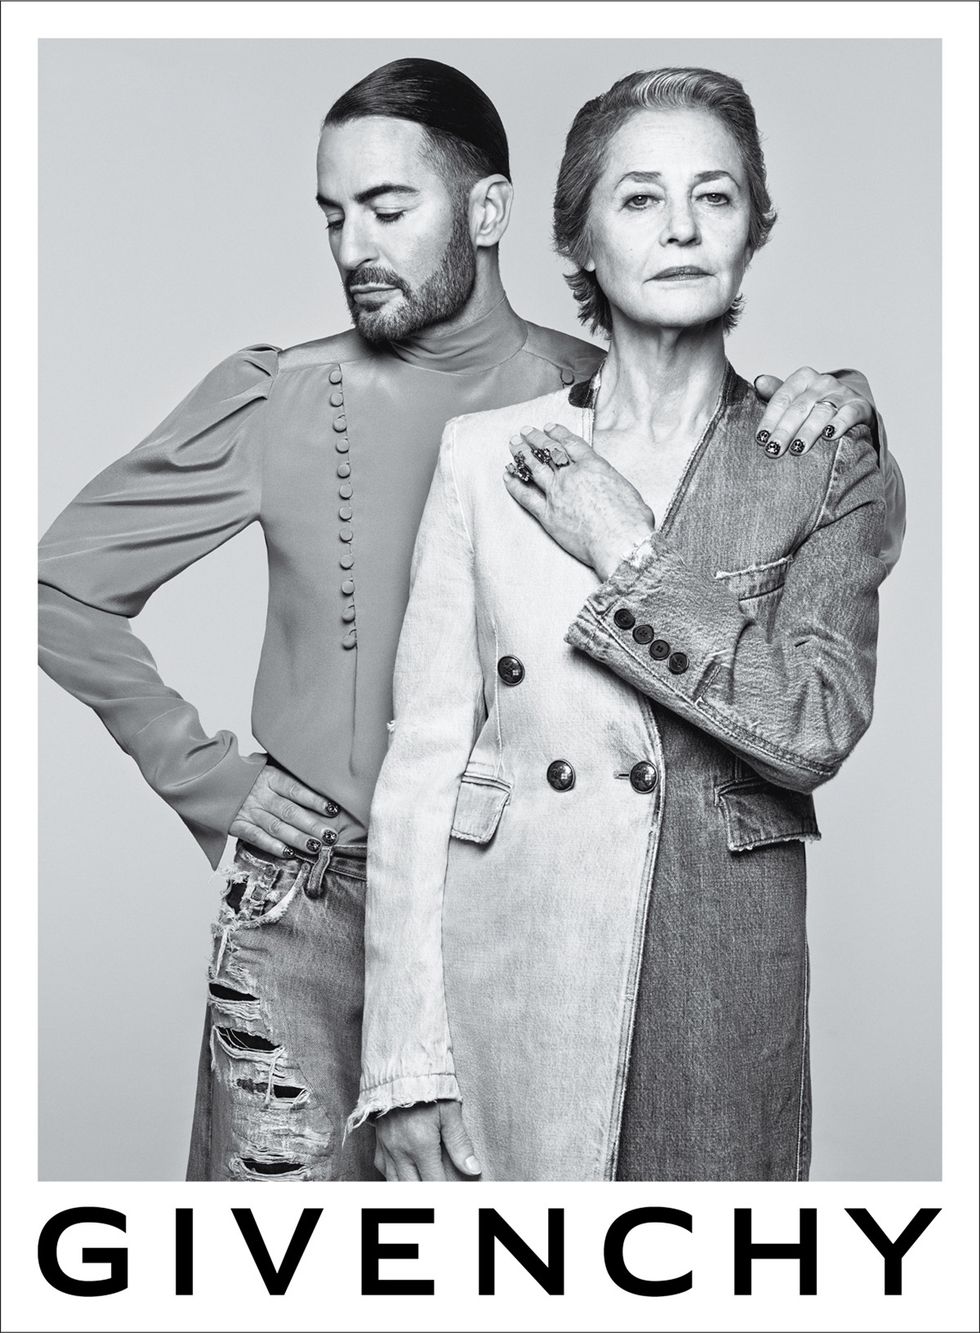 Series 7 - Louis Vuitton presents new advertising campaign - ZOE Magazine